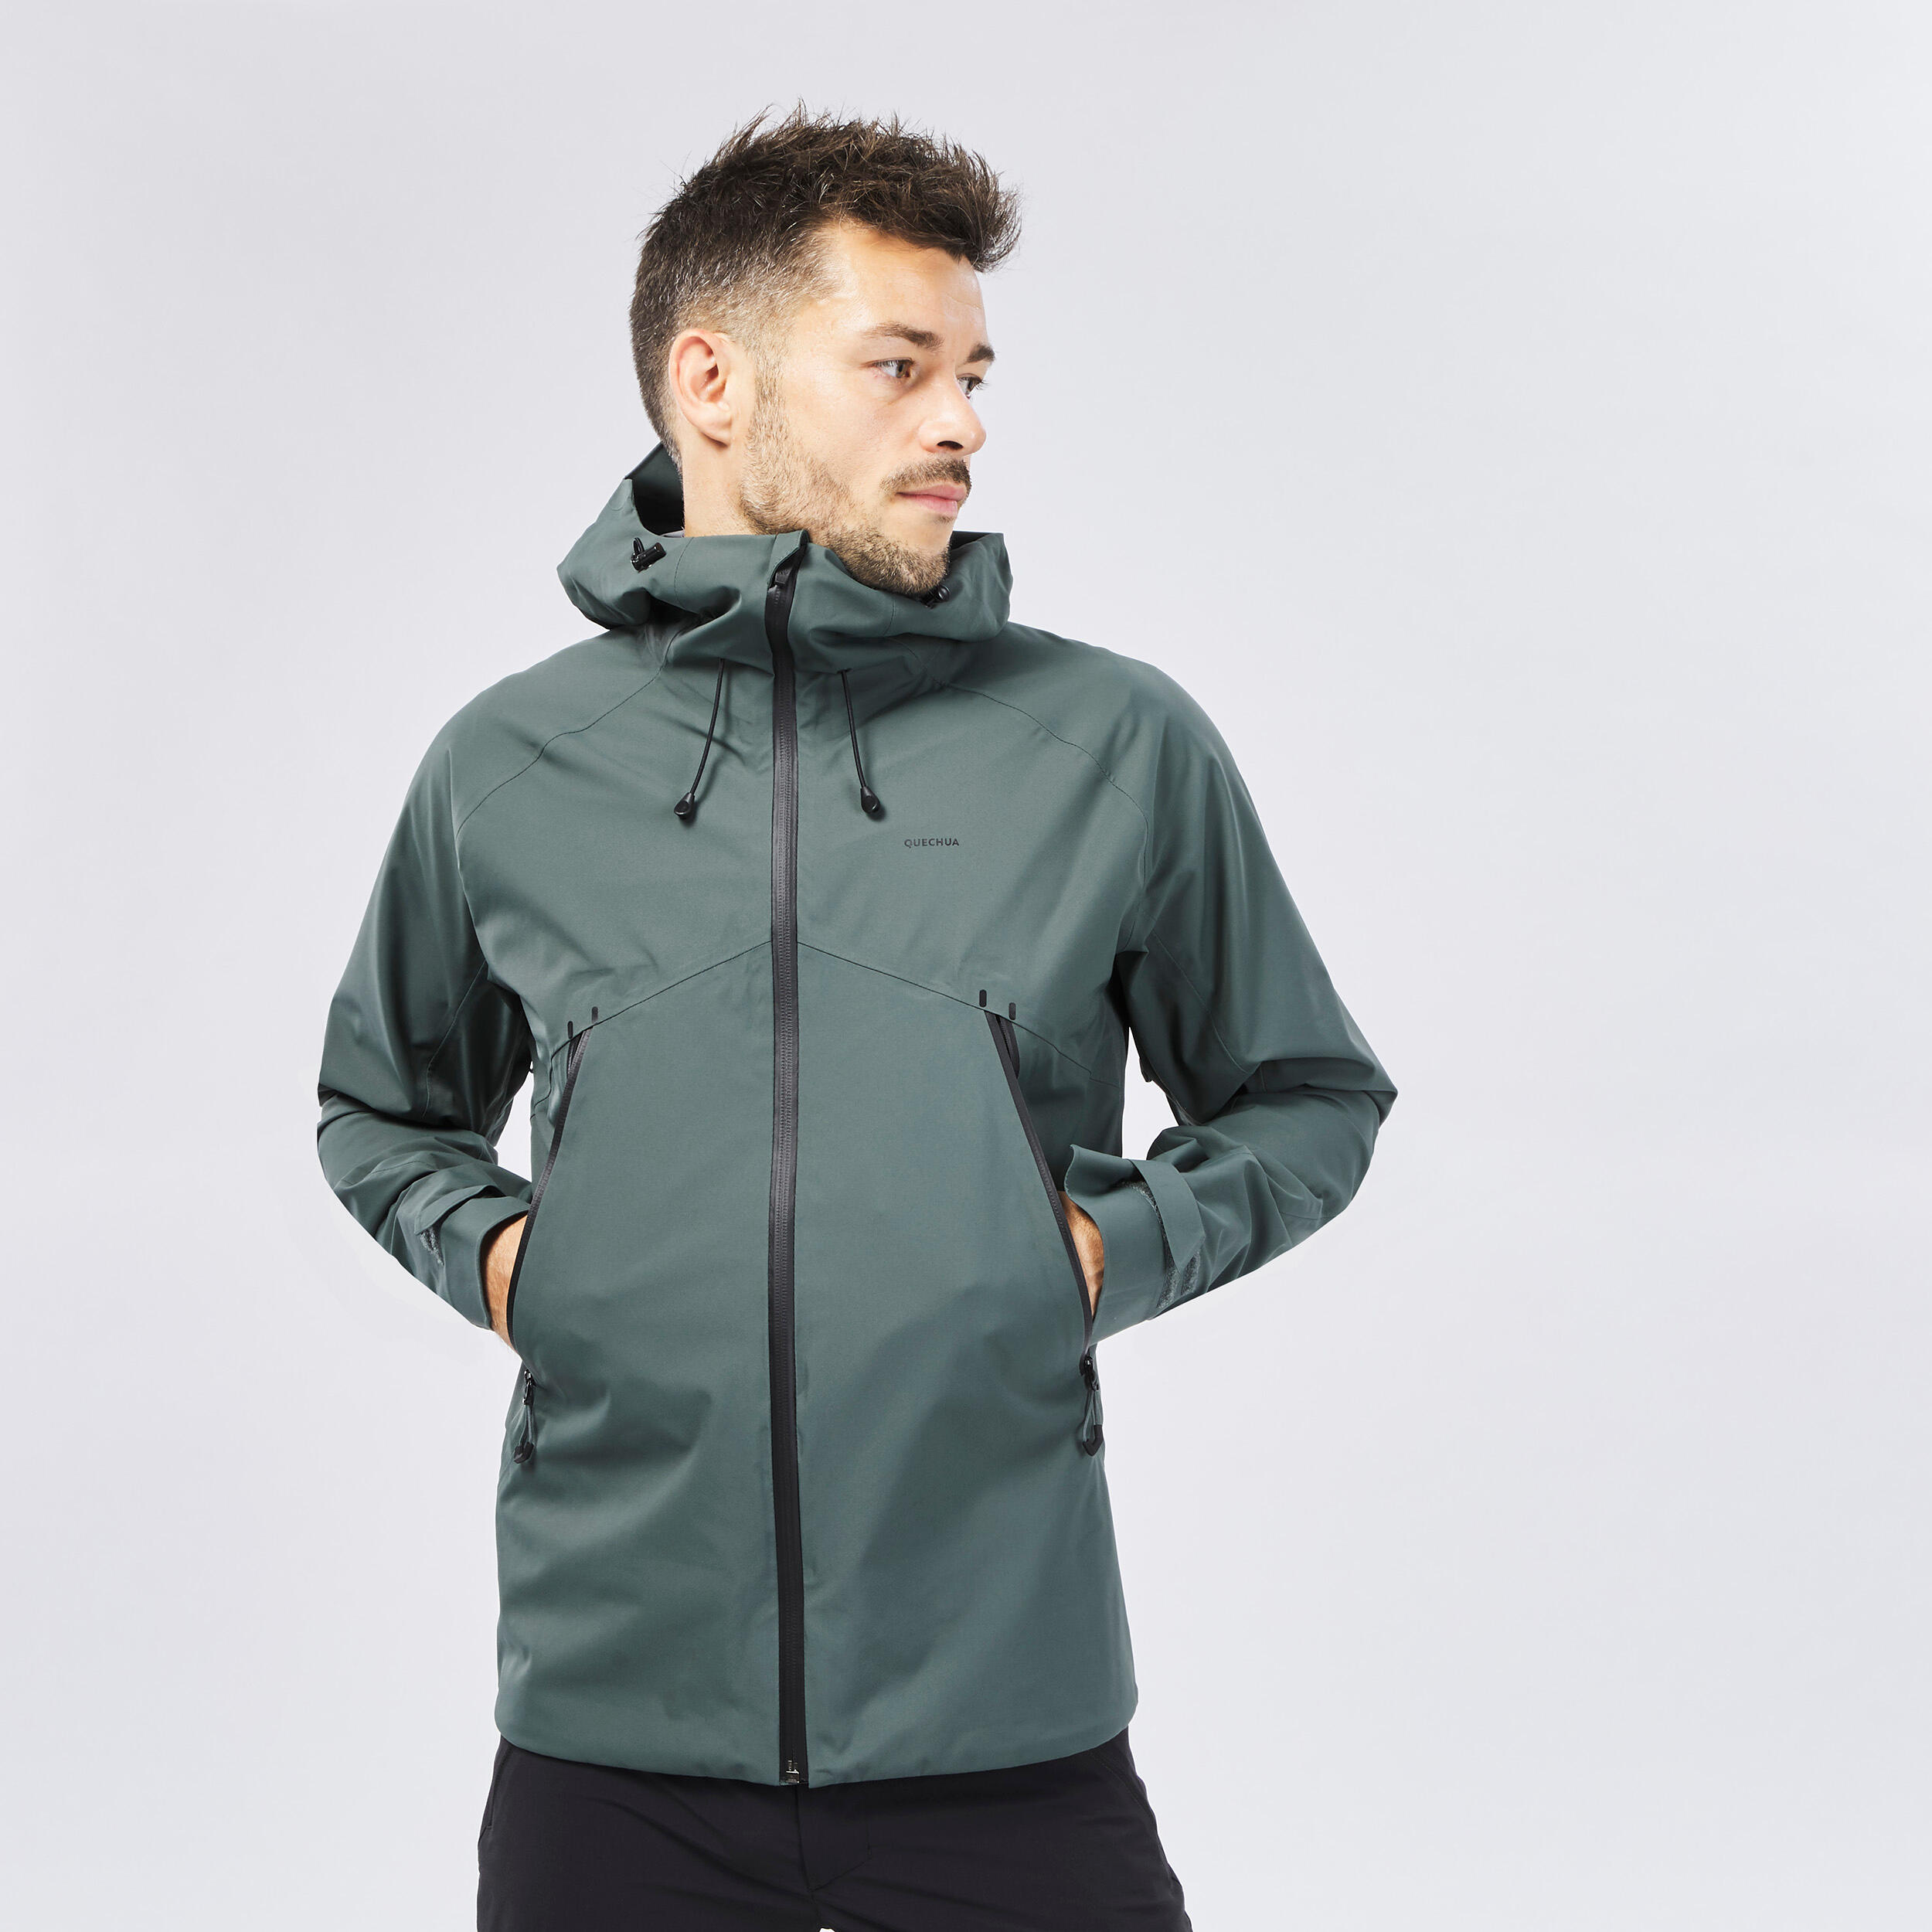 Men's Waterproof Hiking Jacket - MH 500 Khaki - Dark grey green